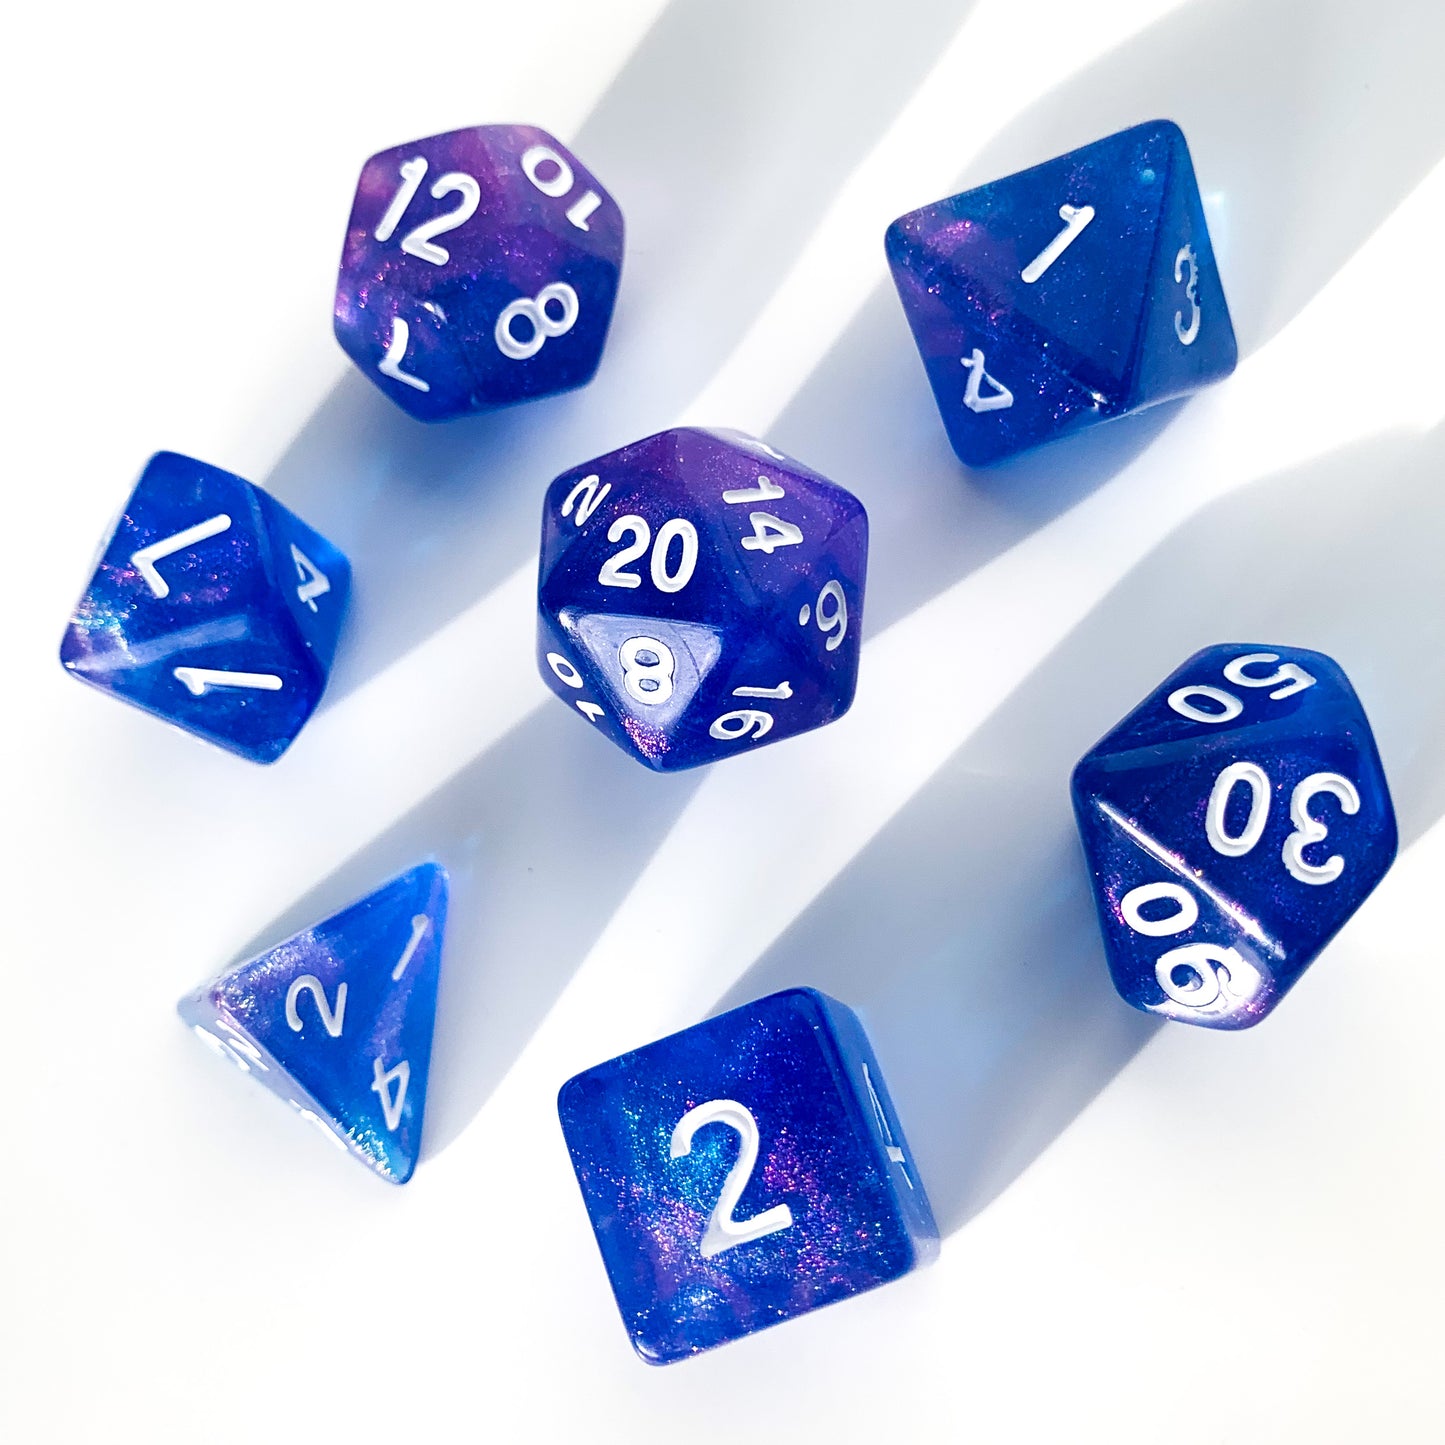 Violet Galaxy - Iridescent Galaxy dice set - 7 piece RPG dice set